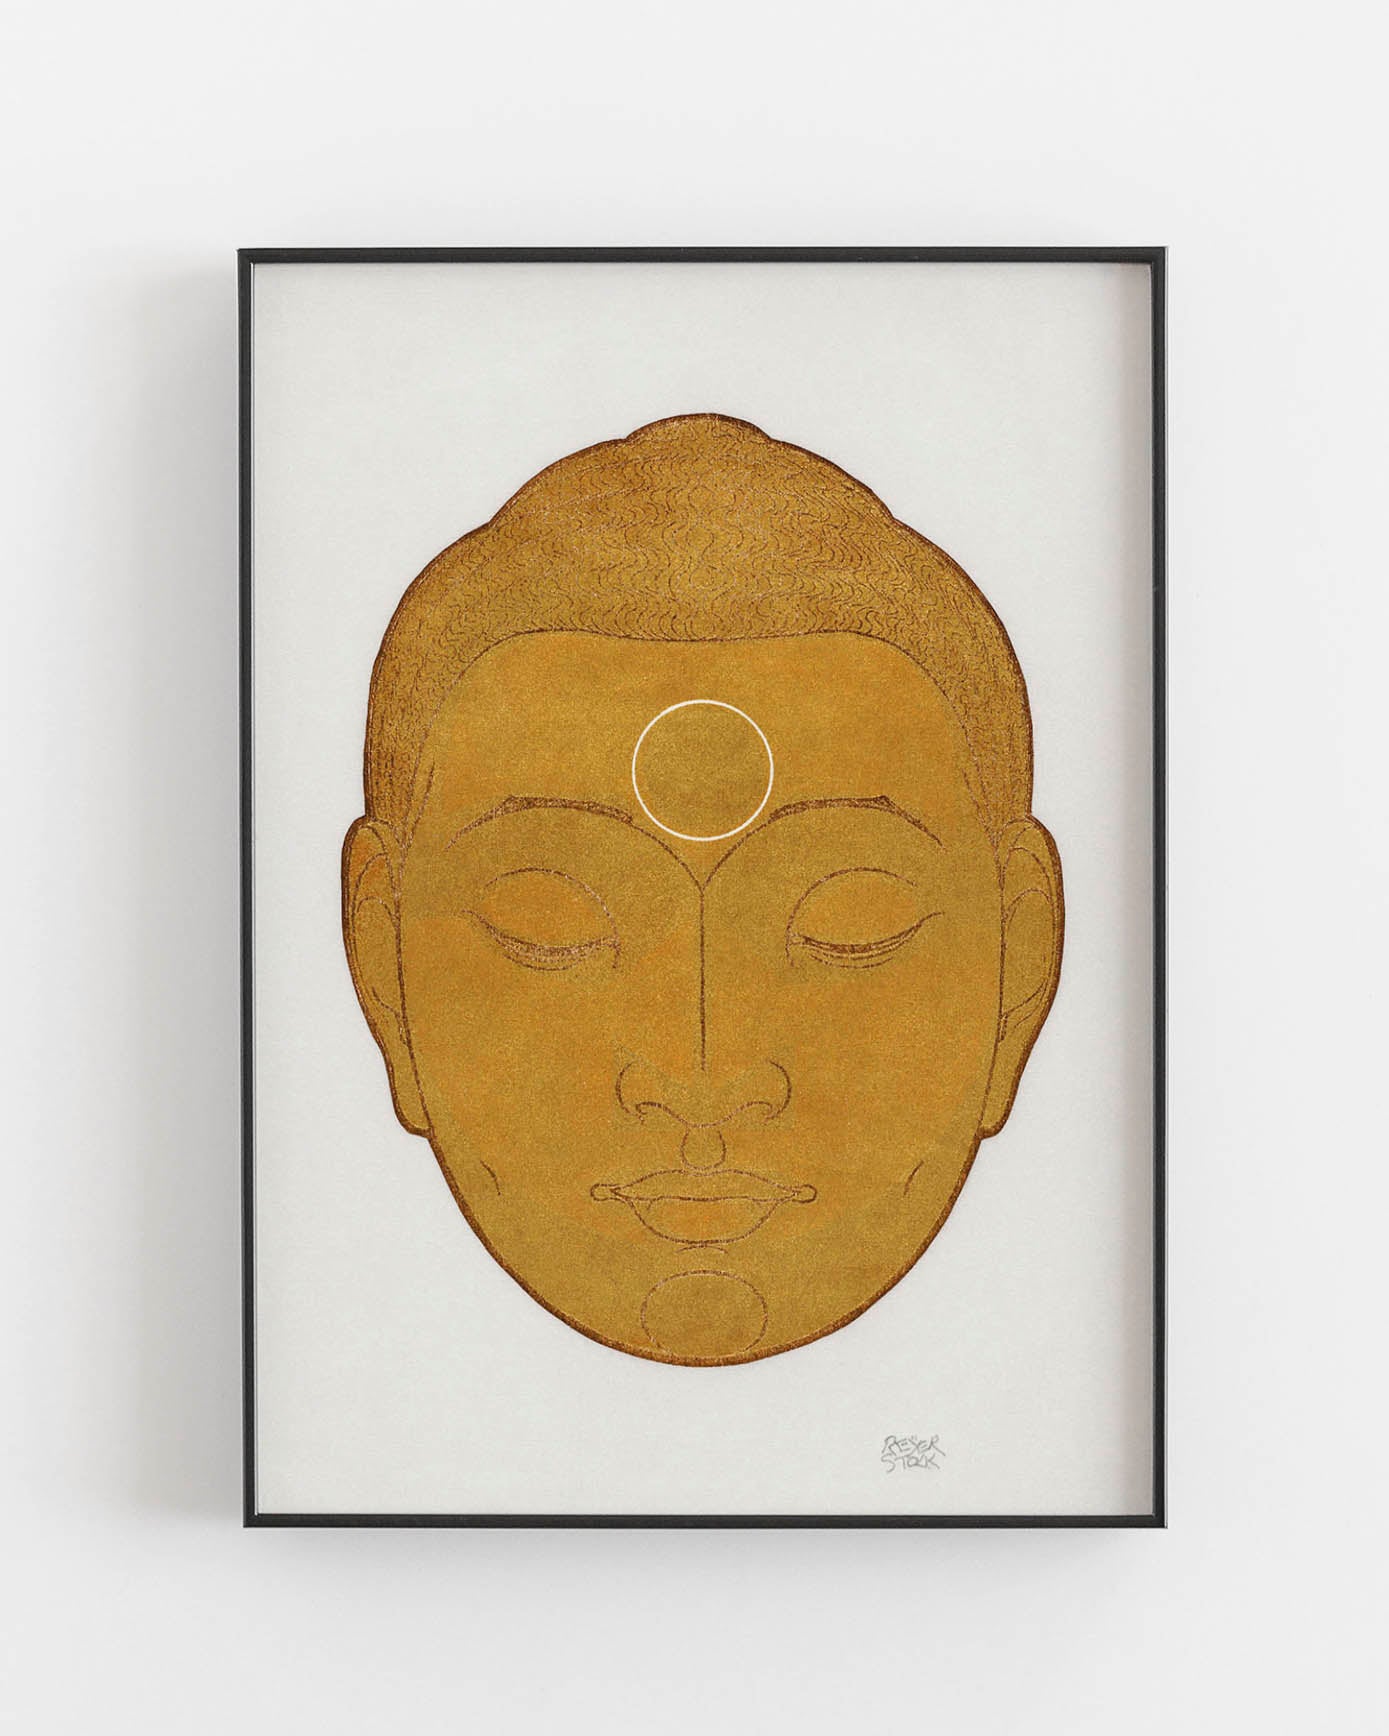 Head of Buddha by Reijer Stolk